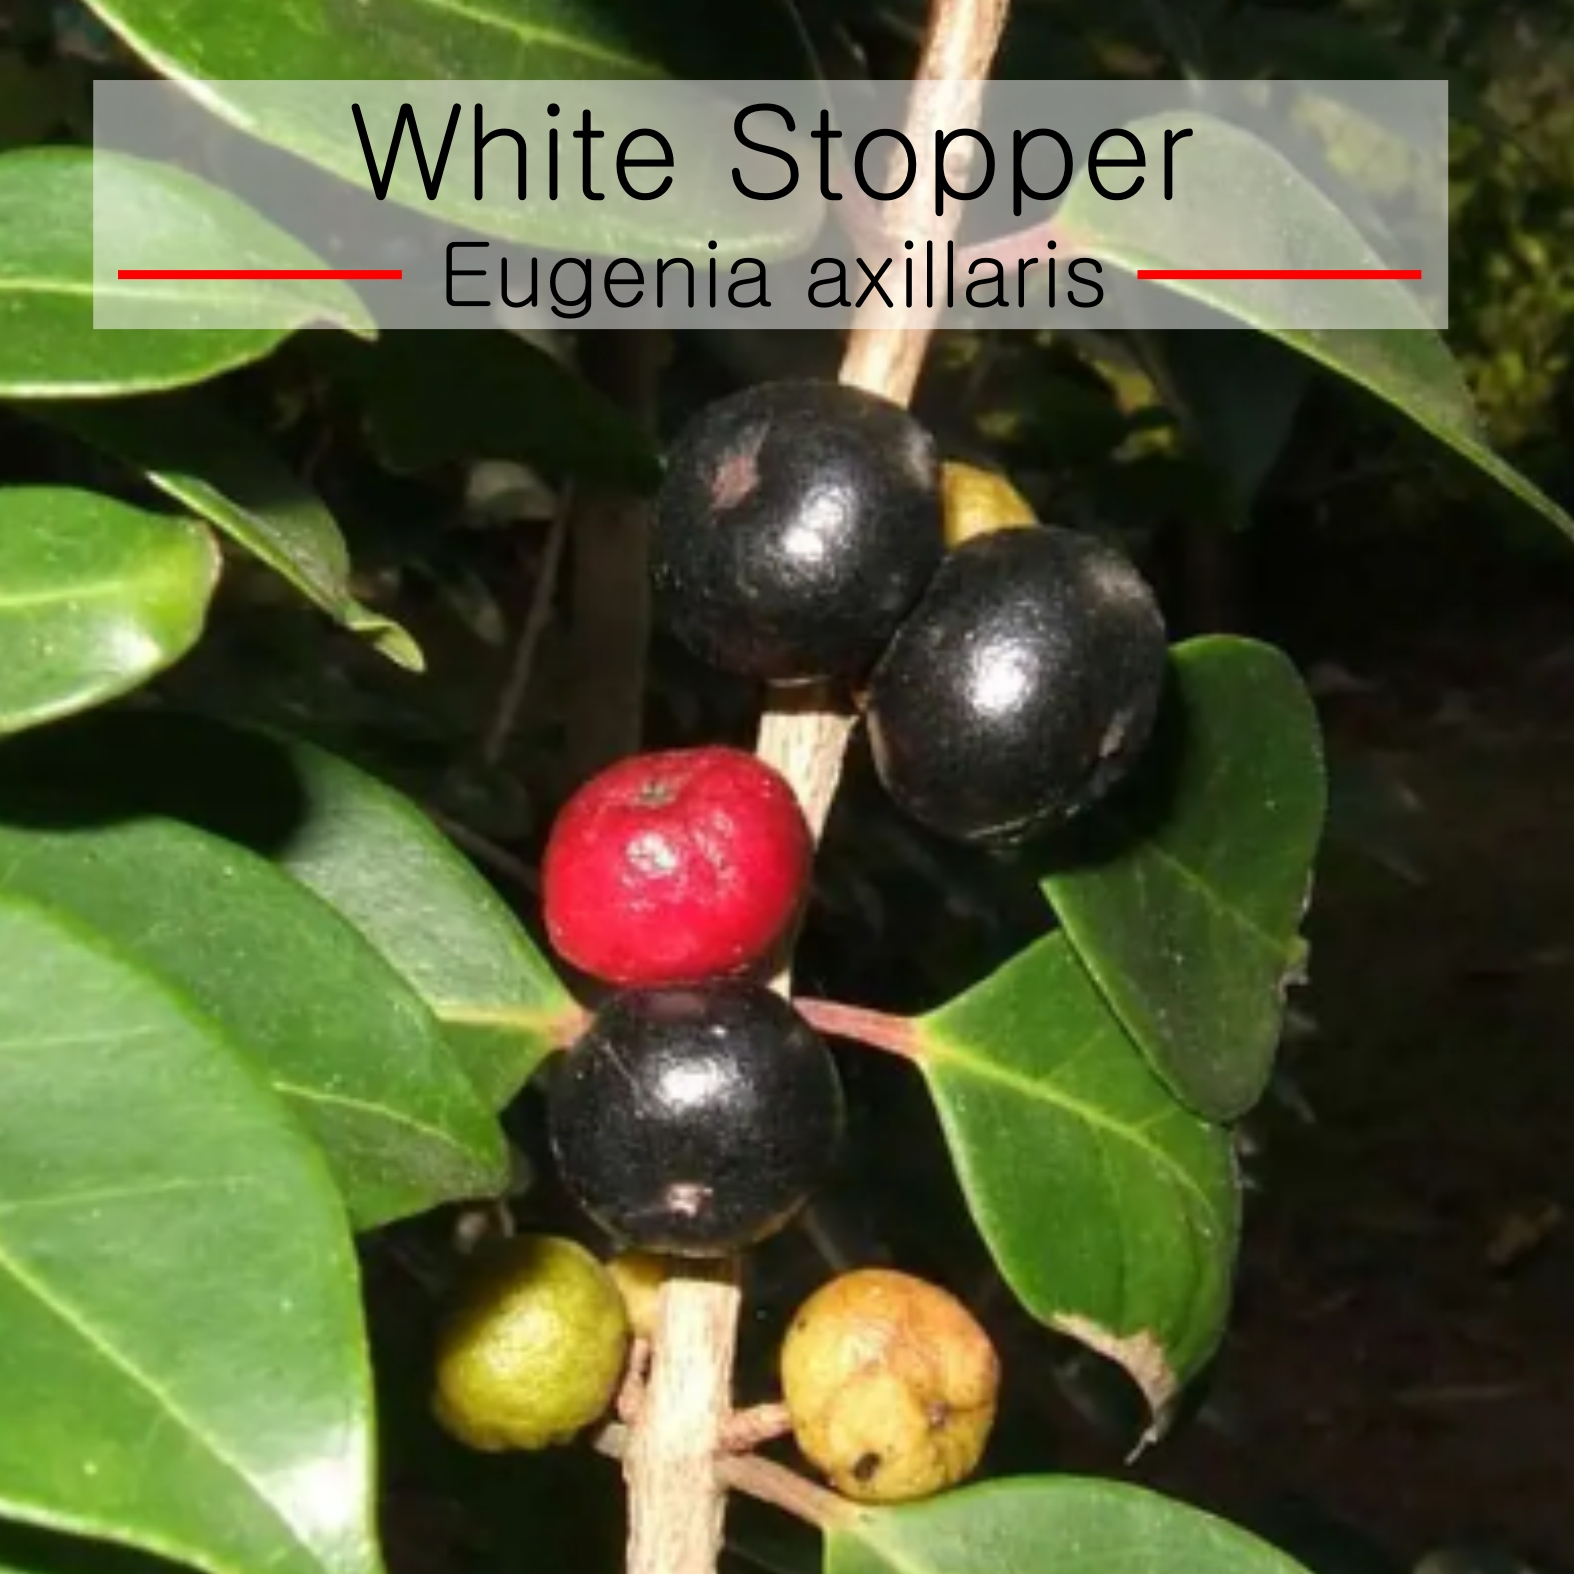  Eugenia axillaris  - White Stopper 1 fresh seed / 1 frischer Samen